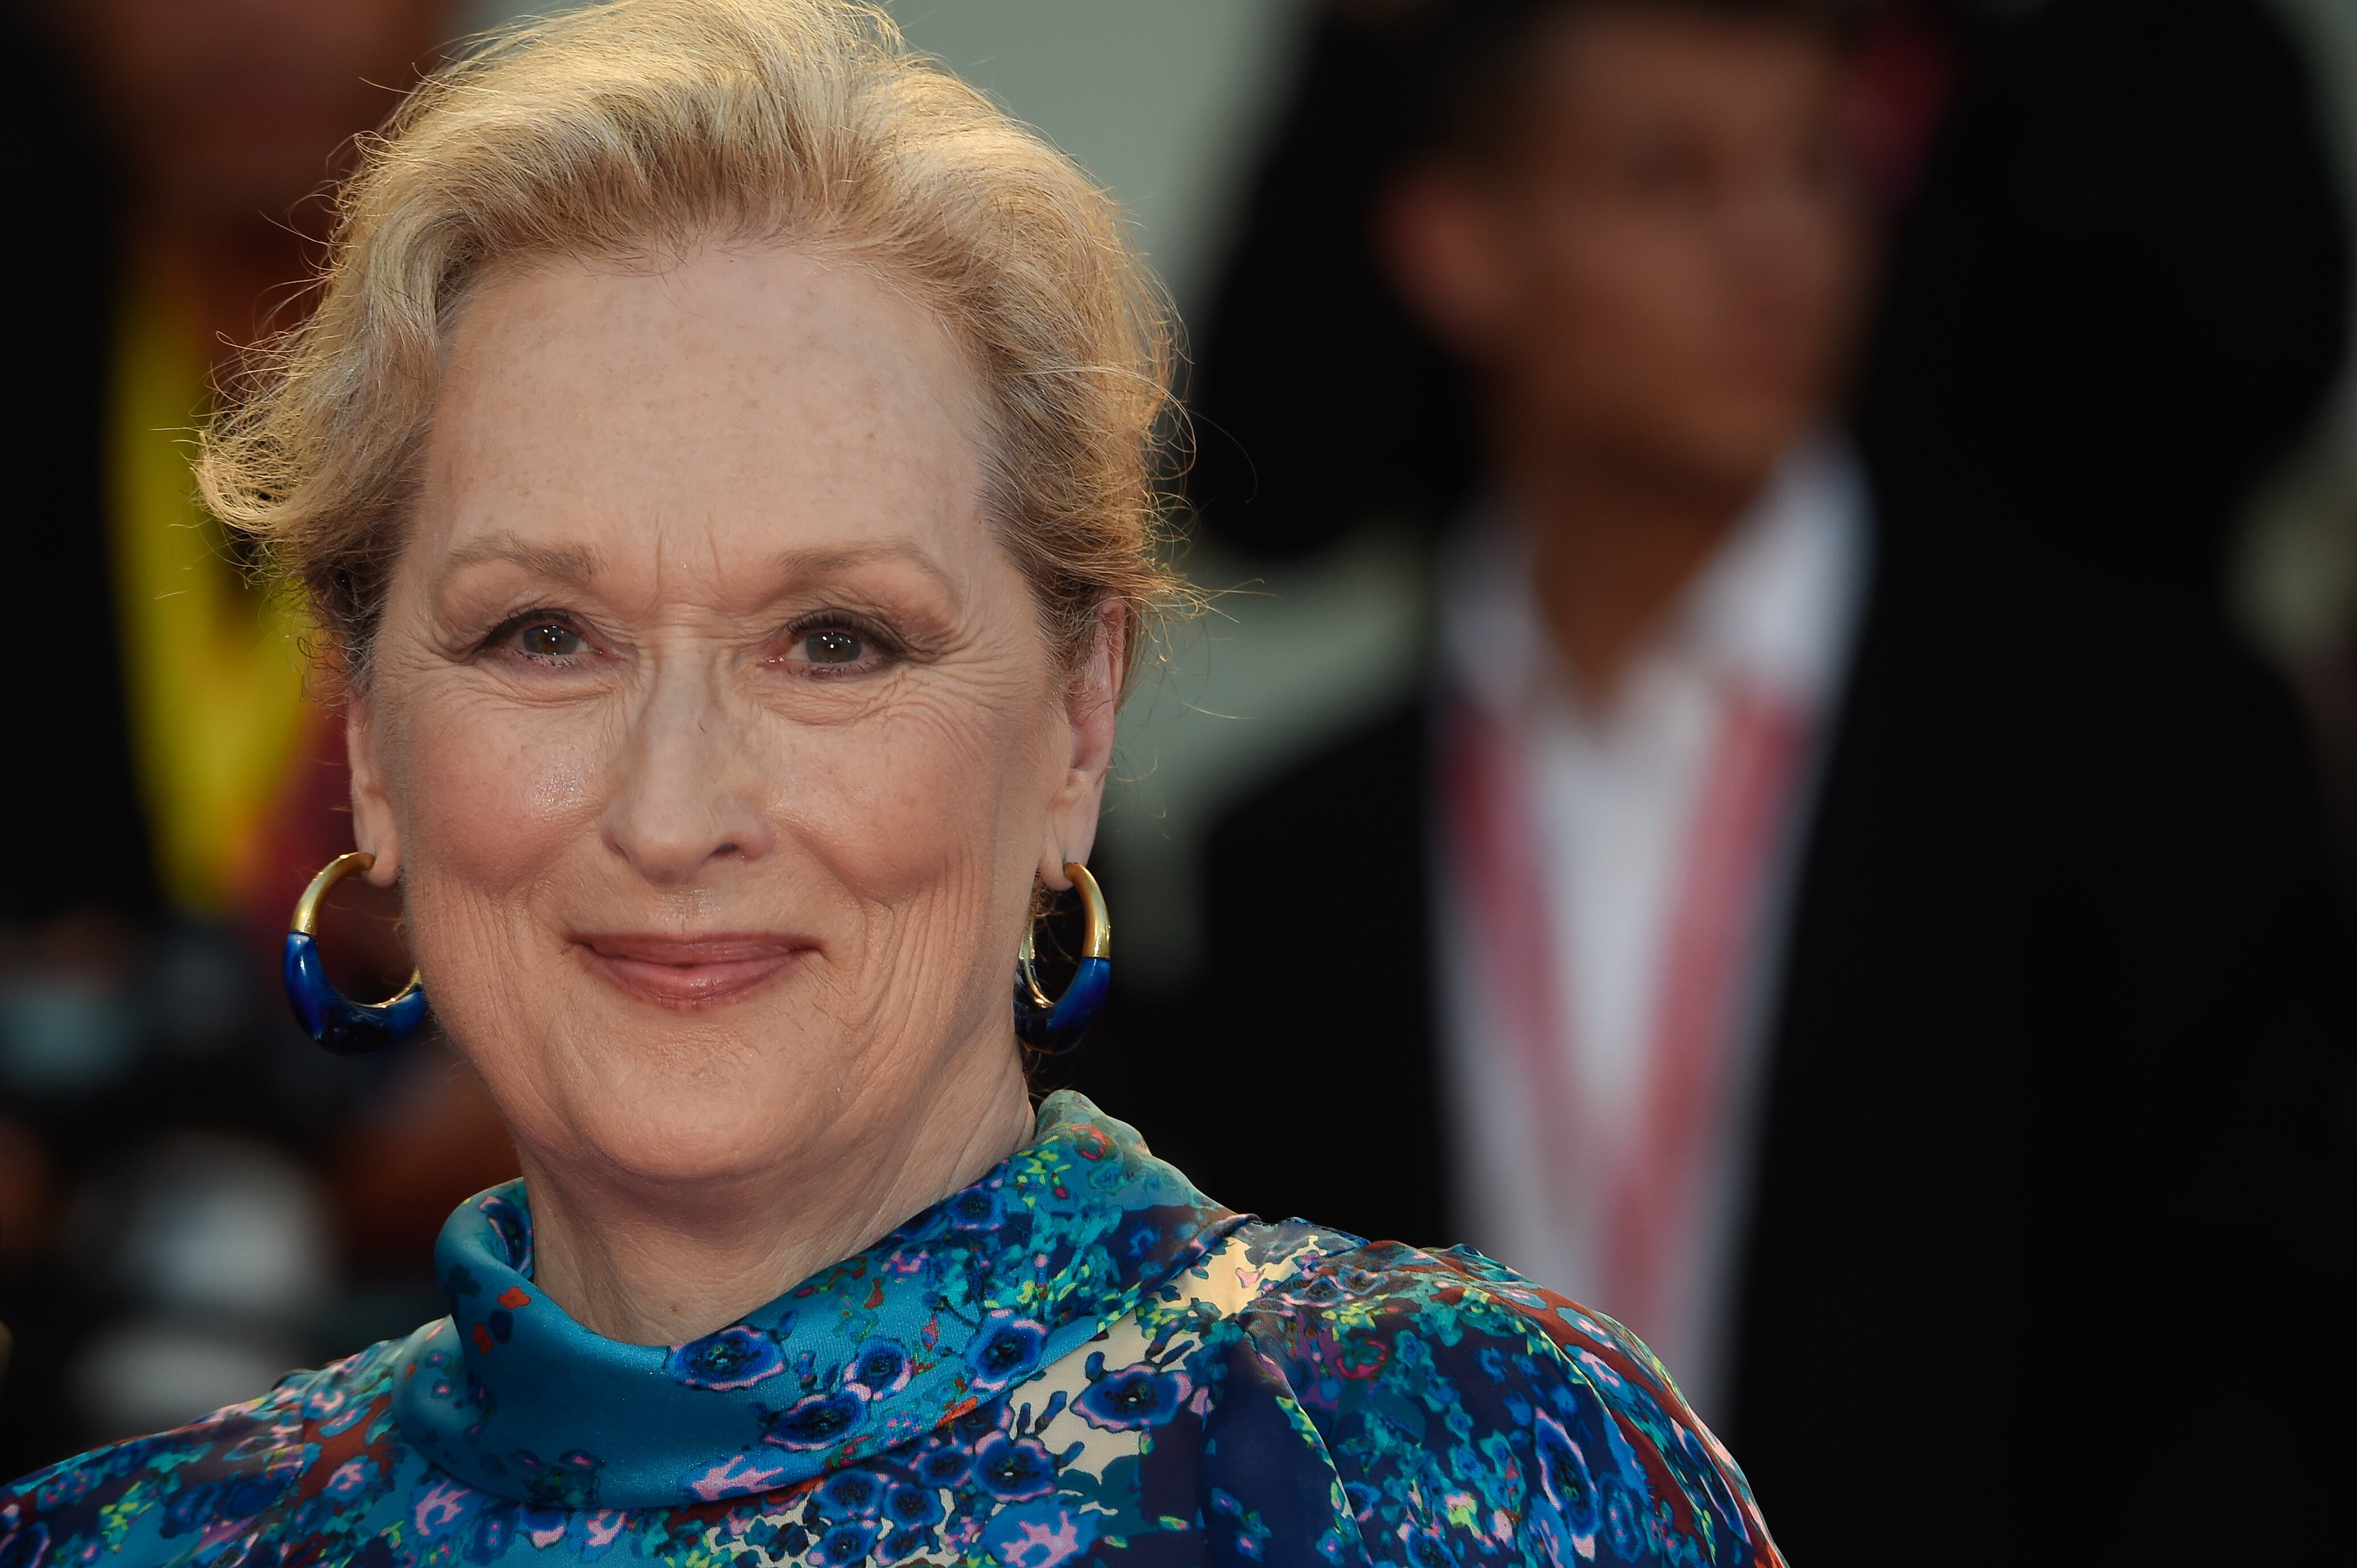 Meryl Streep at the 2019 Venice Film Festival.